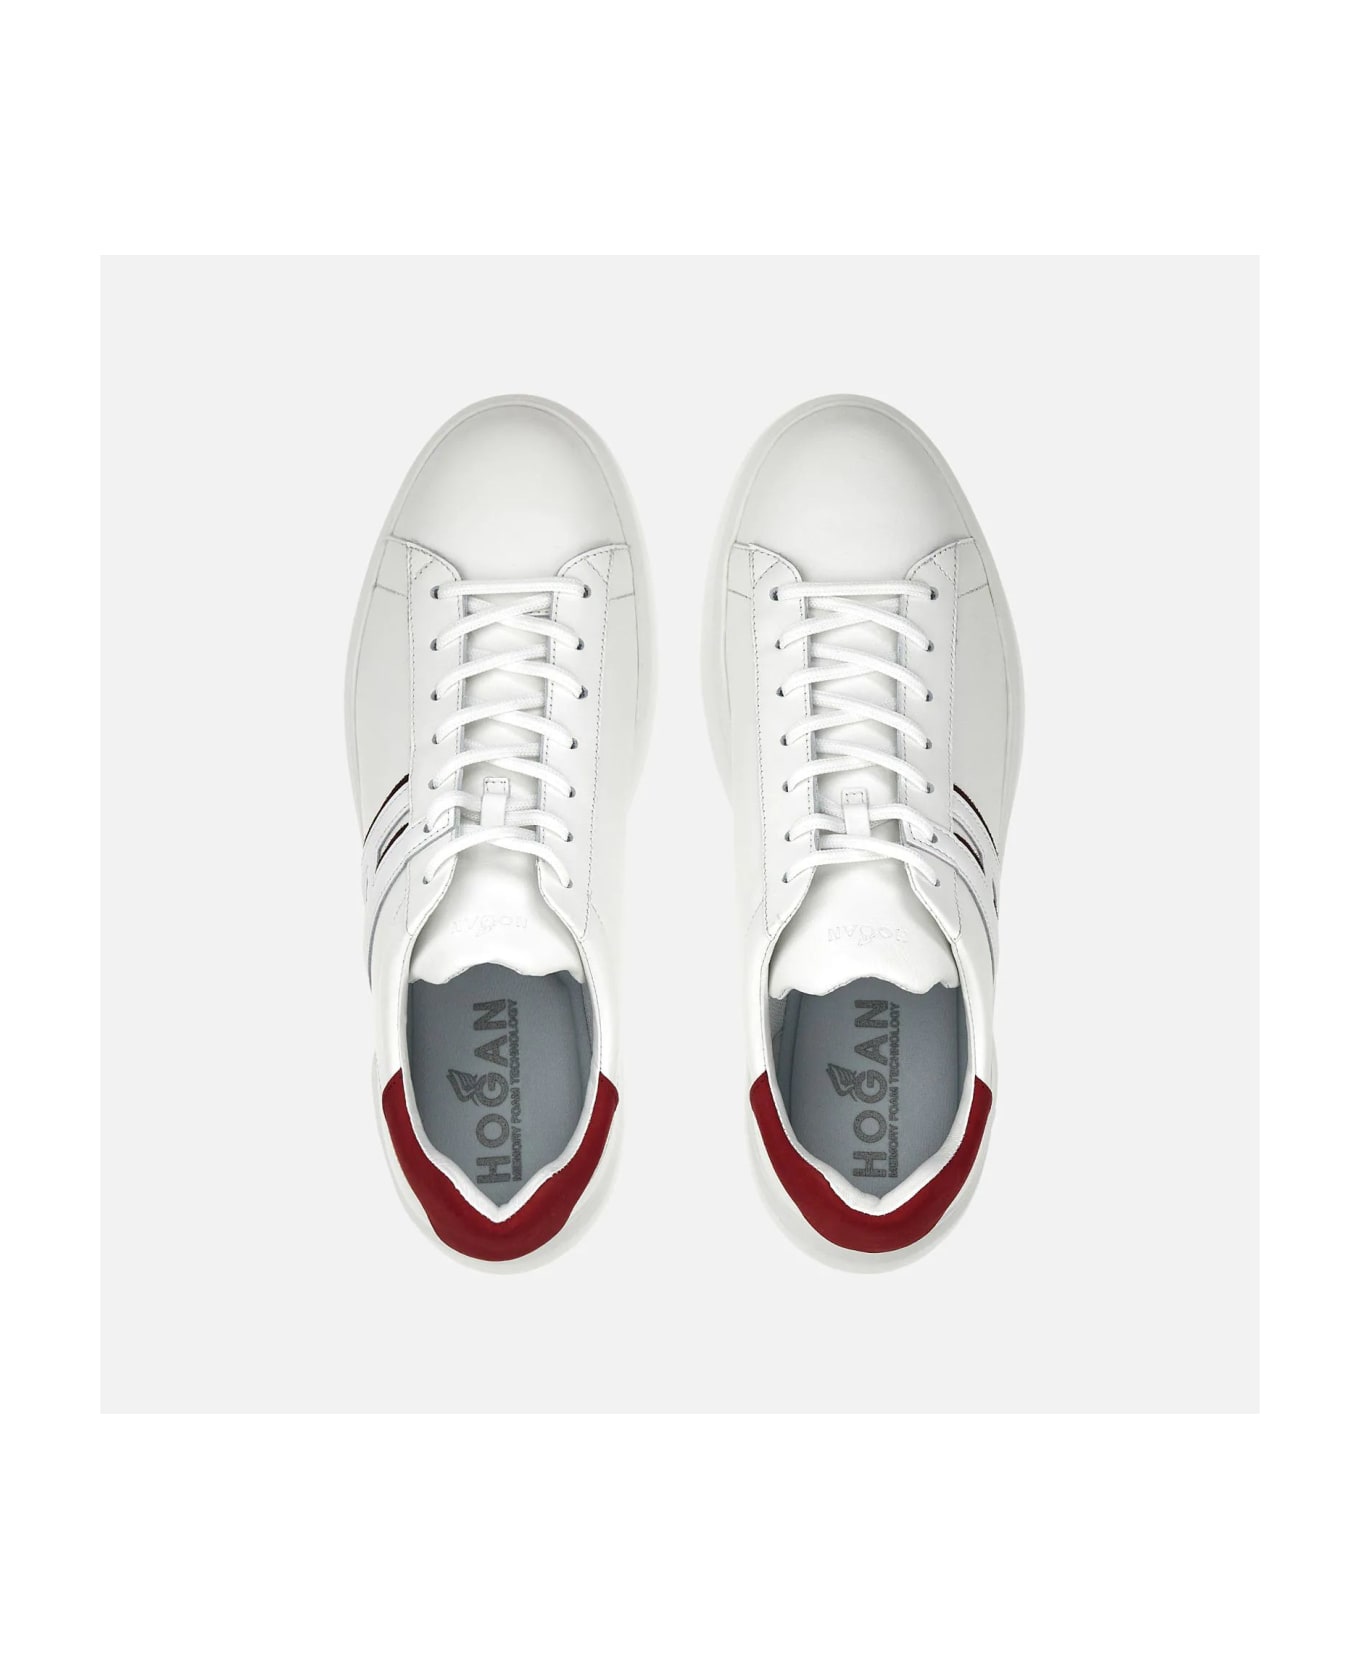 Hogan H580 Sneakers - Bianco/rosso スニーカー